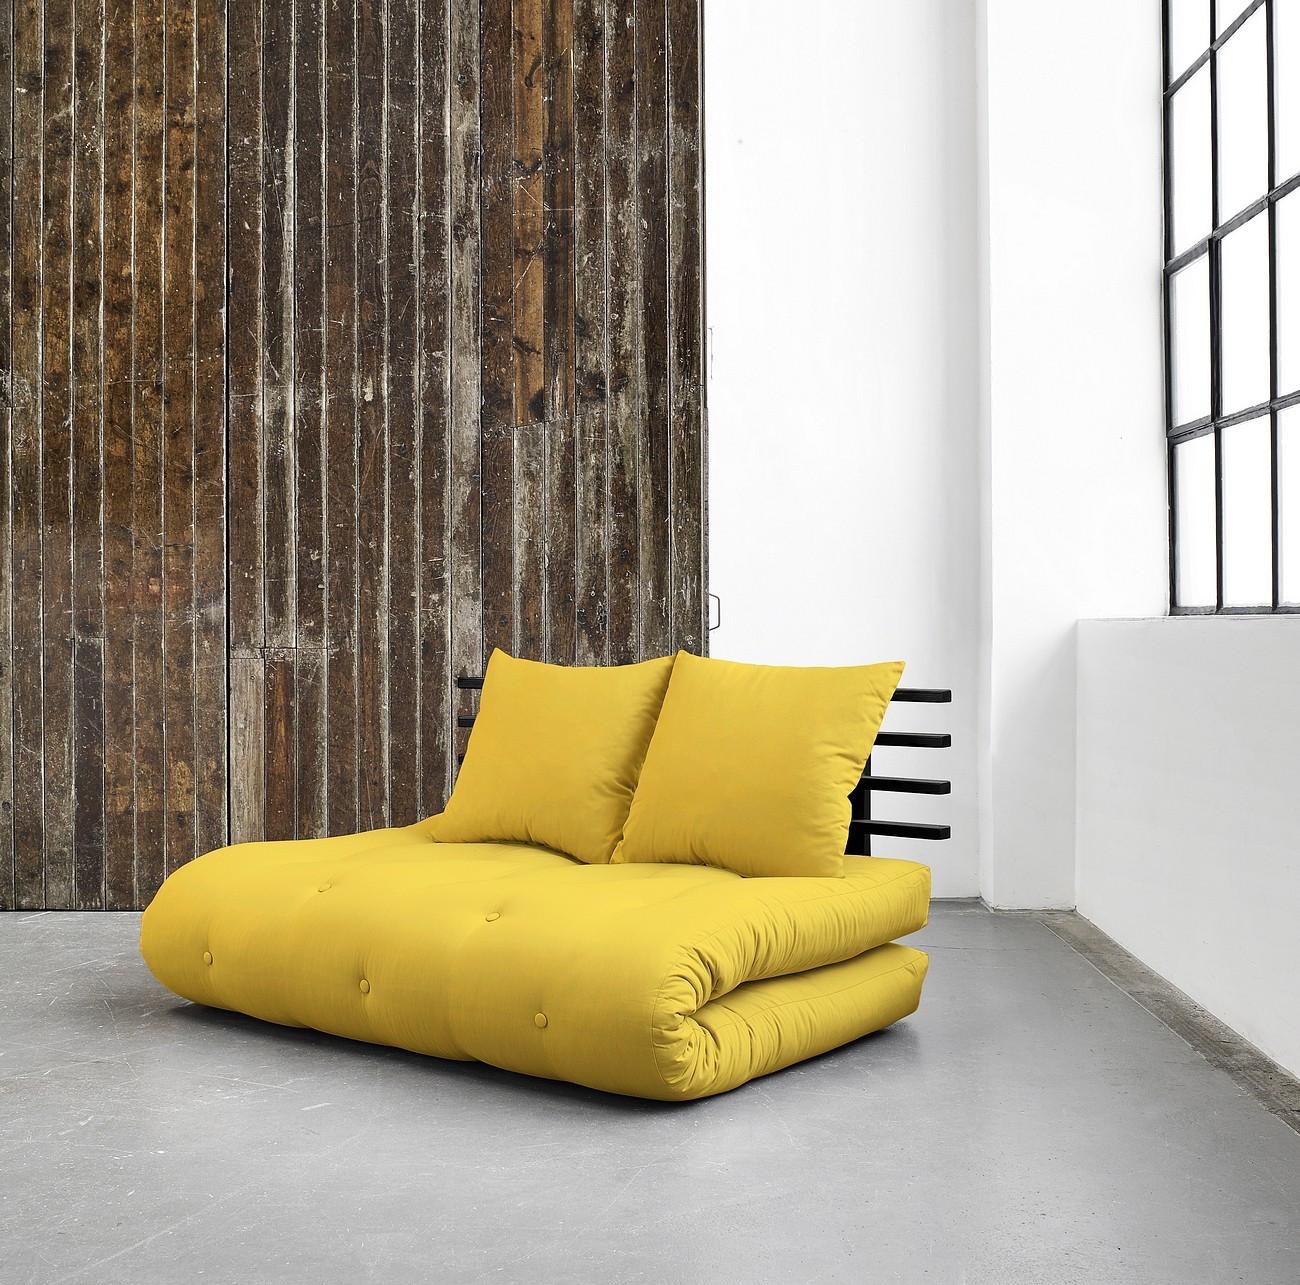 Желтый бескаркасный диван